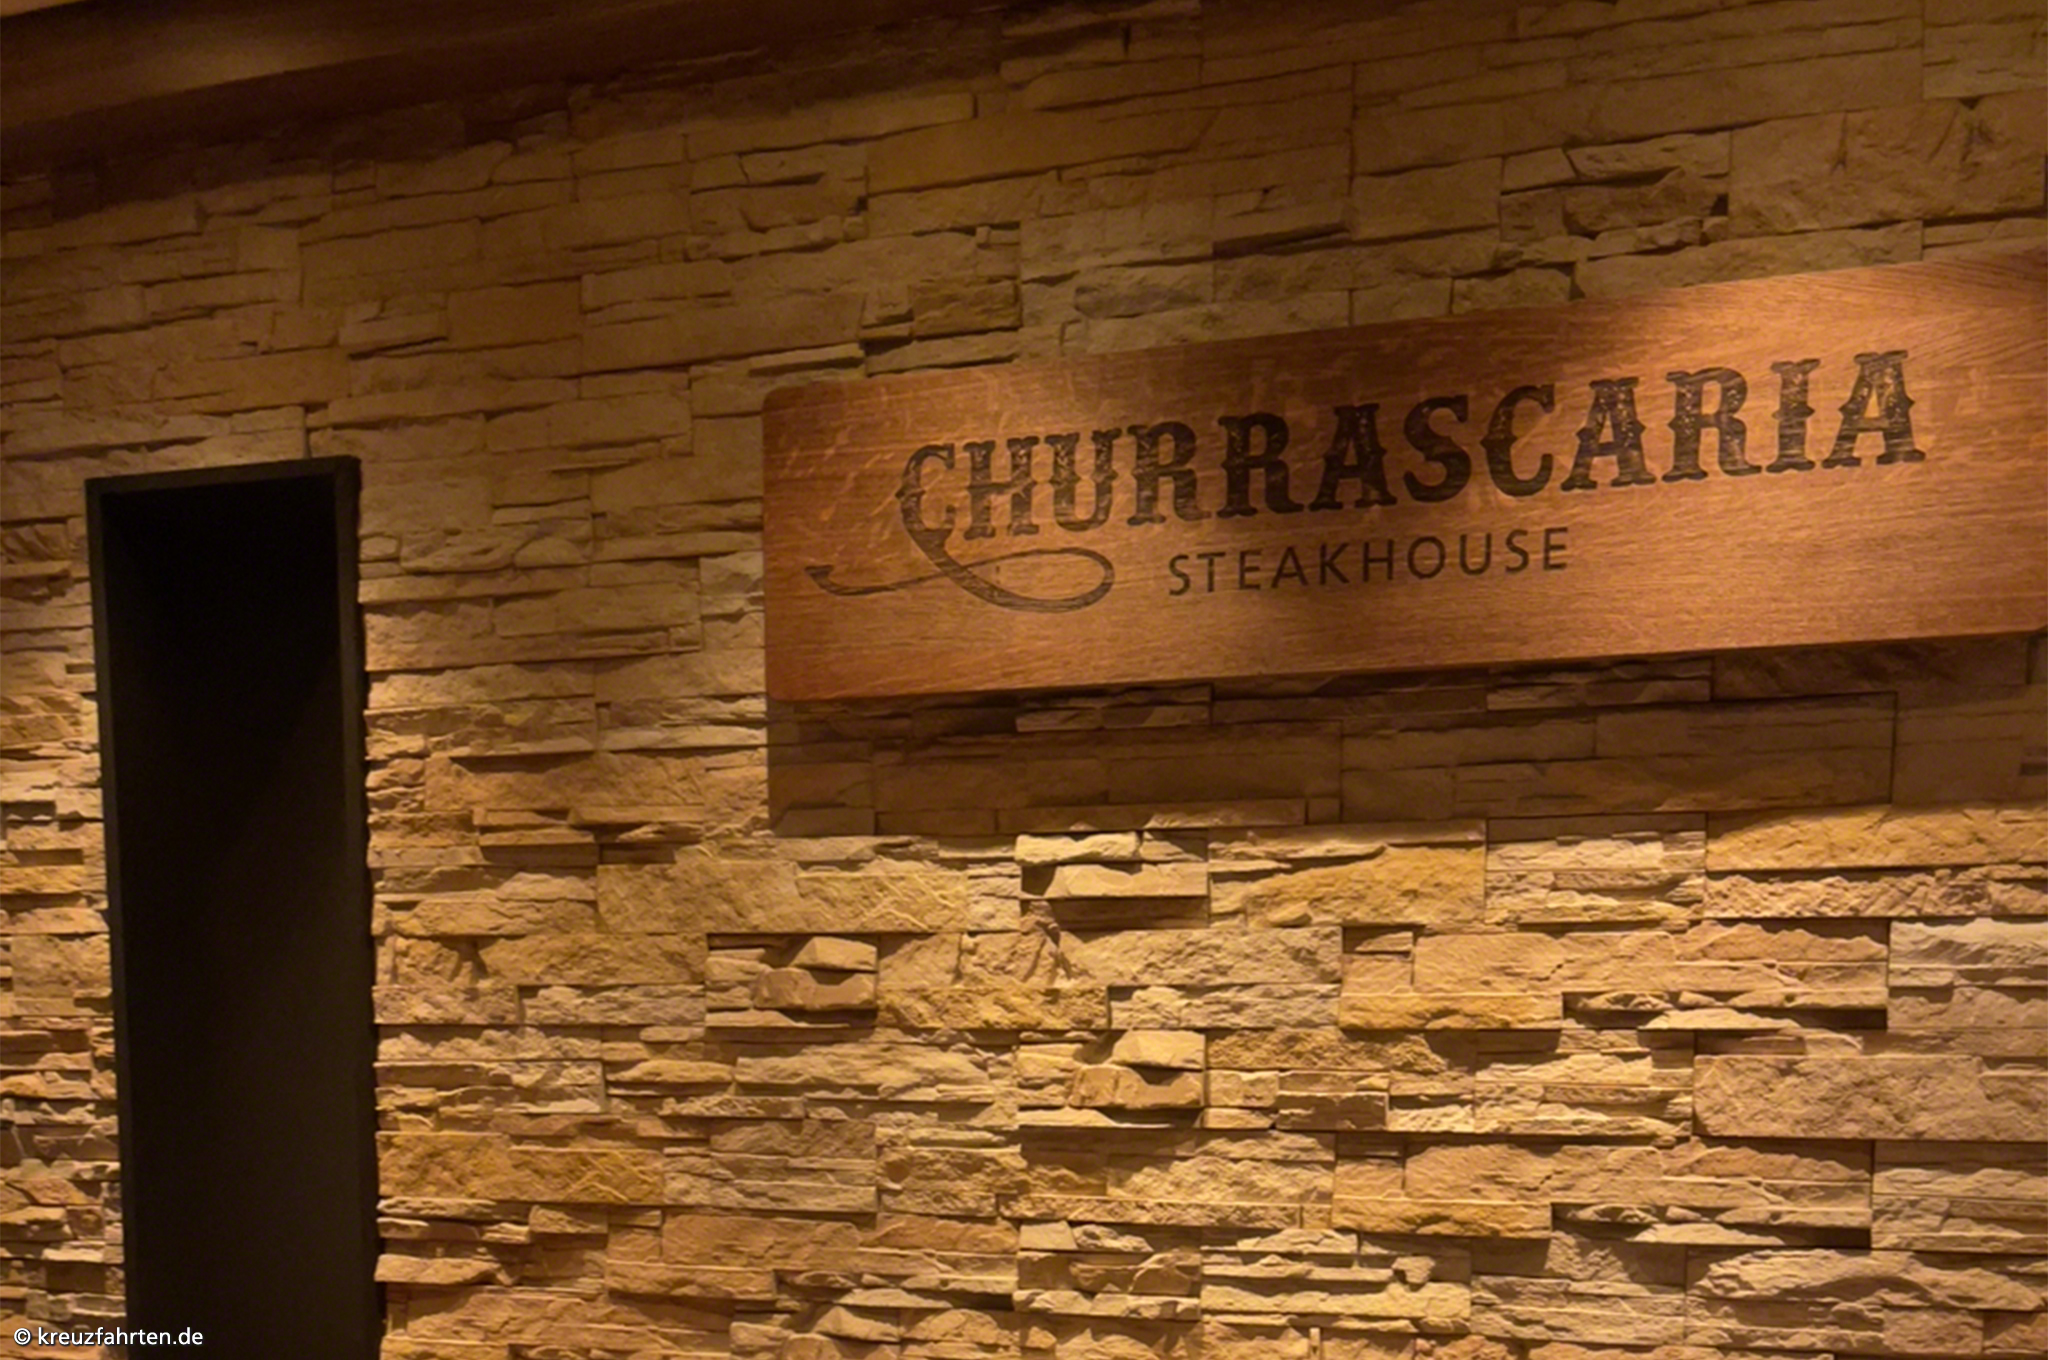 Churrascaria Steakhouse